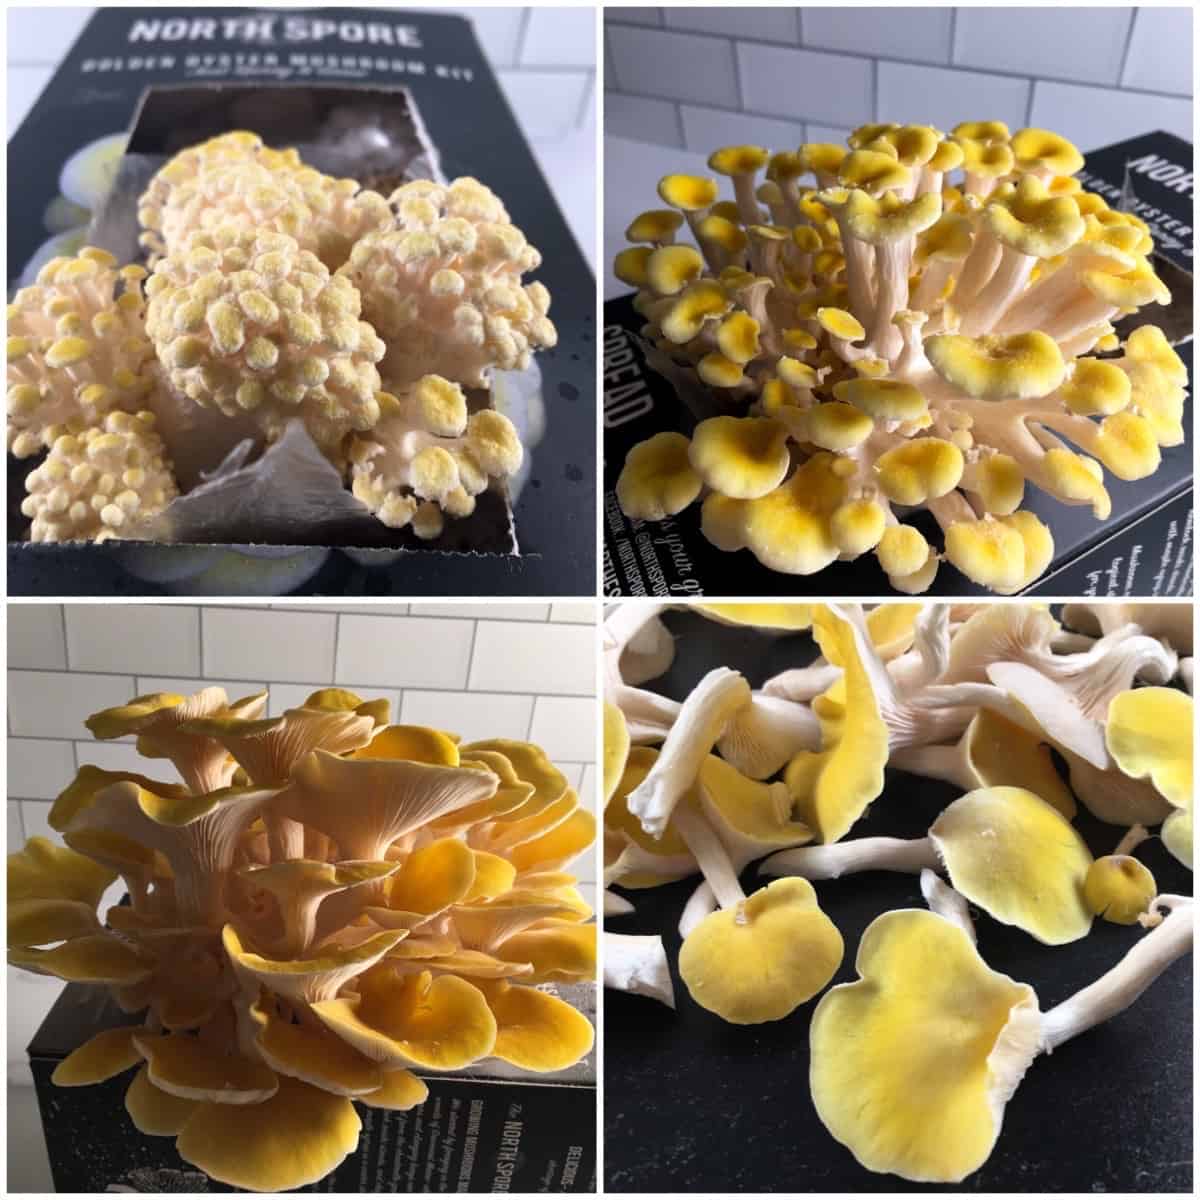 Golden Oyster Mushroom Grow Kit (North Spore Mushrooms Kit Review)